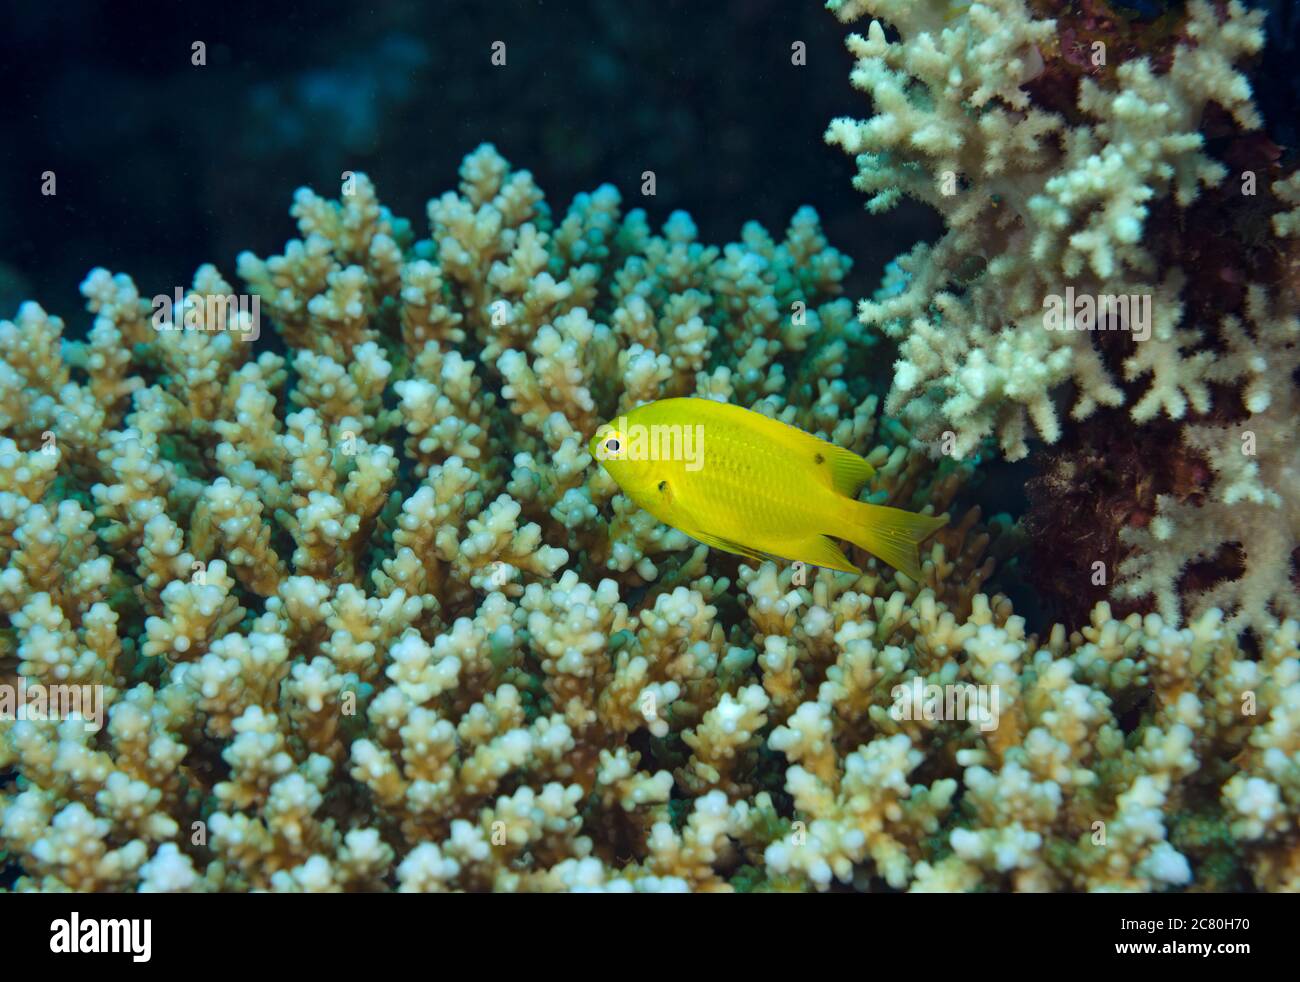 Sulphur damsel, Pomacentrus sulfureus, on staghorn coral, Acropora cervicornis, on coral reef, Hamata, Red Sea, Egypt Stock Photo